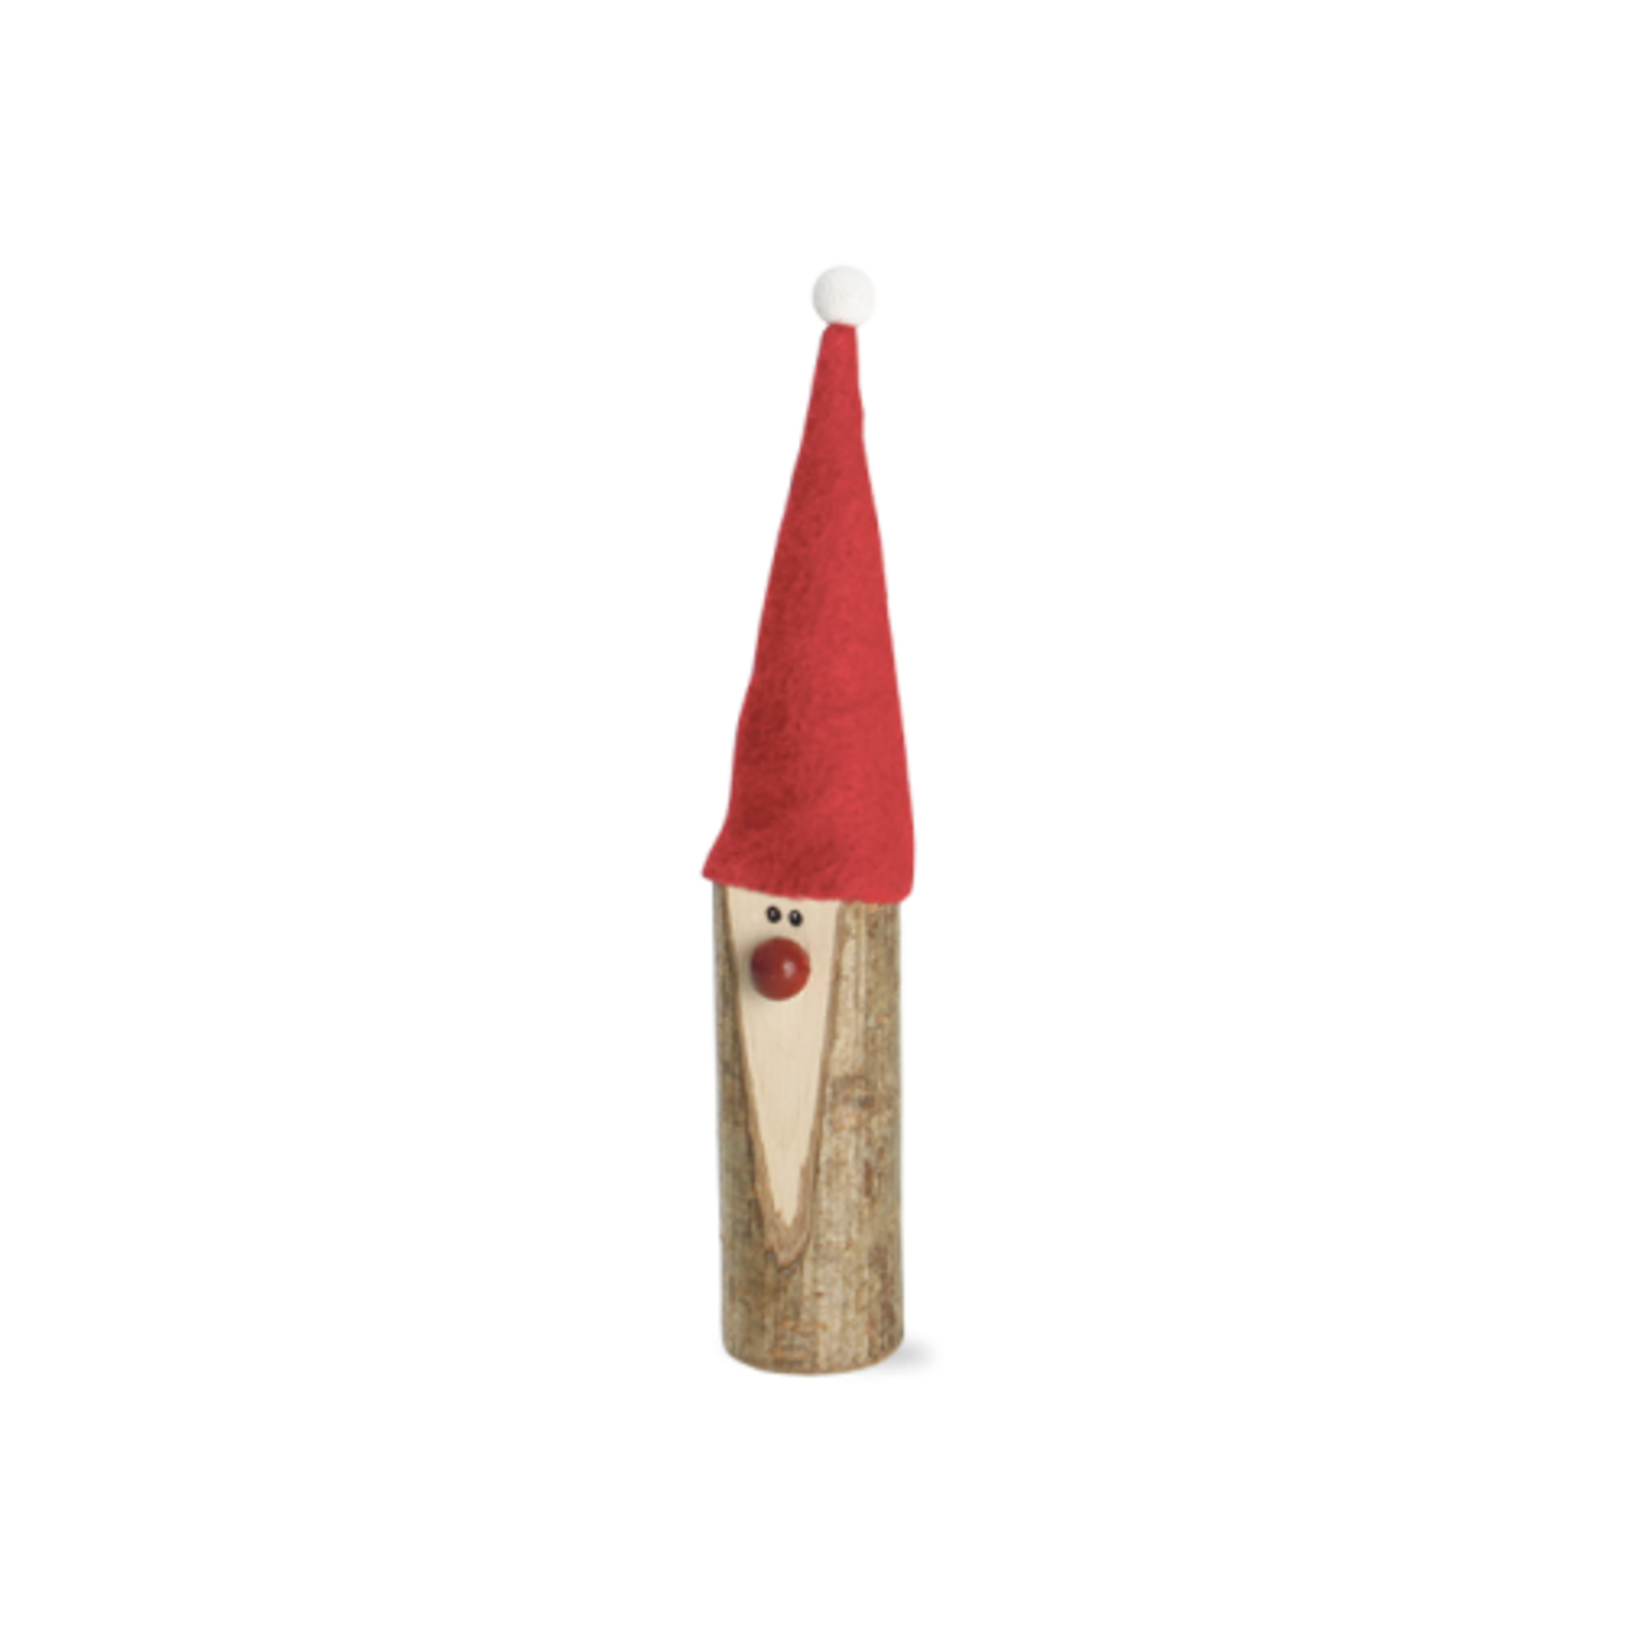 Waldfabrik Wooden Santa Claus 10 cm